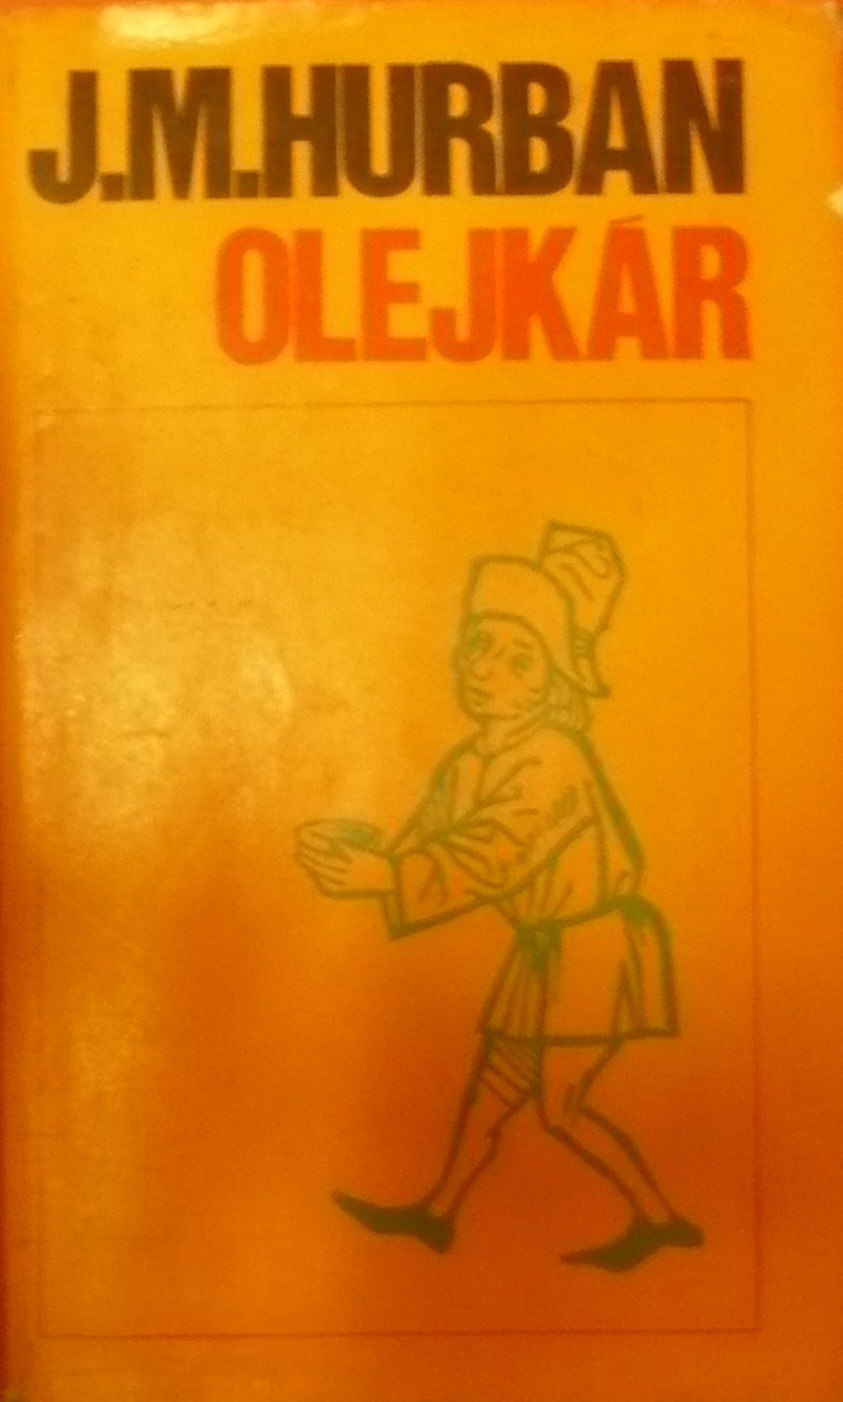 Olejkár /1968/